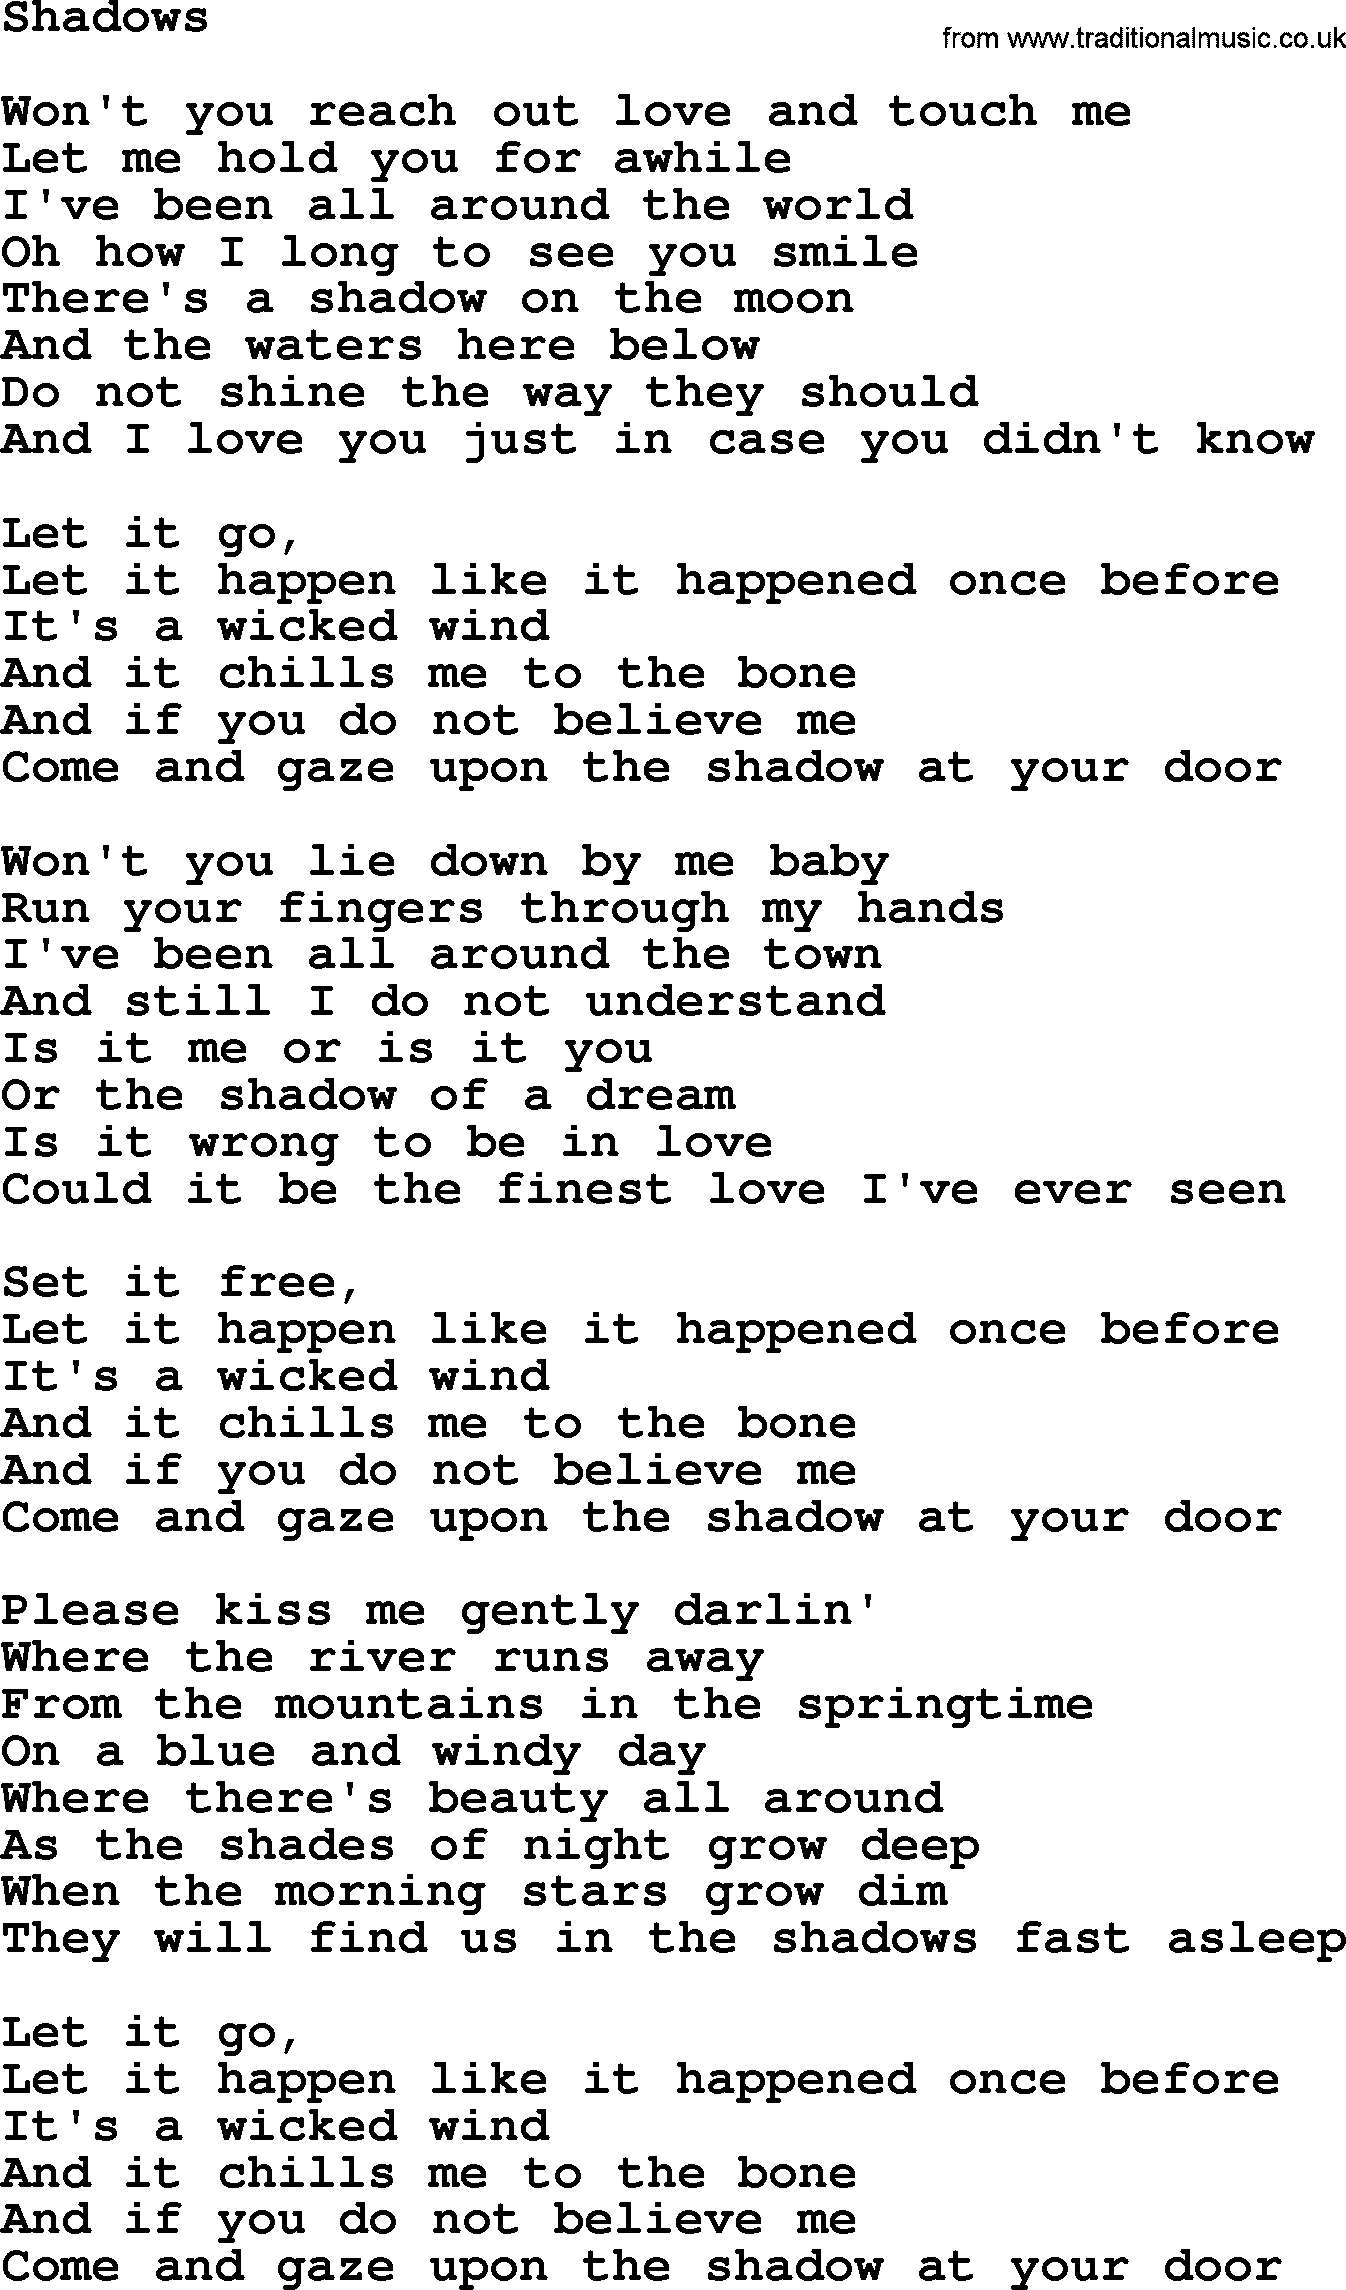 Gordon Lightfoot song Shadows, lyrics